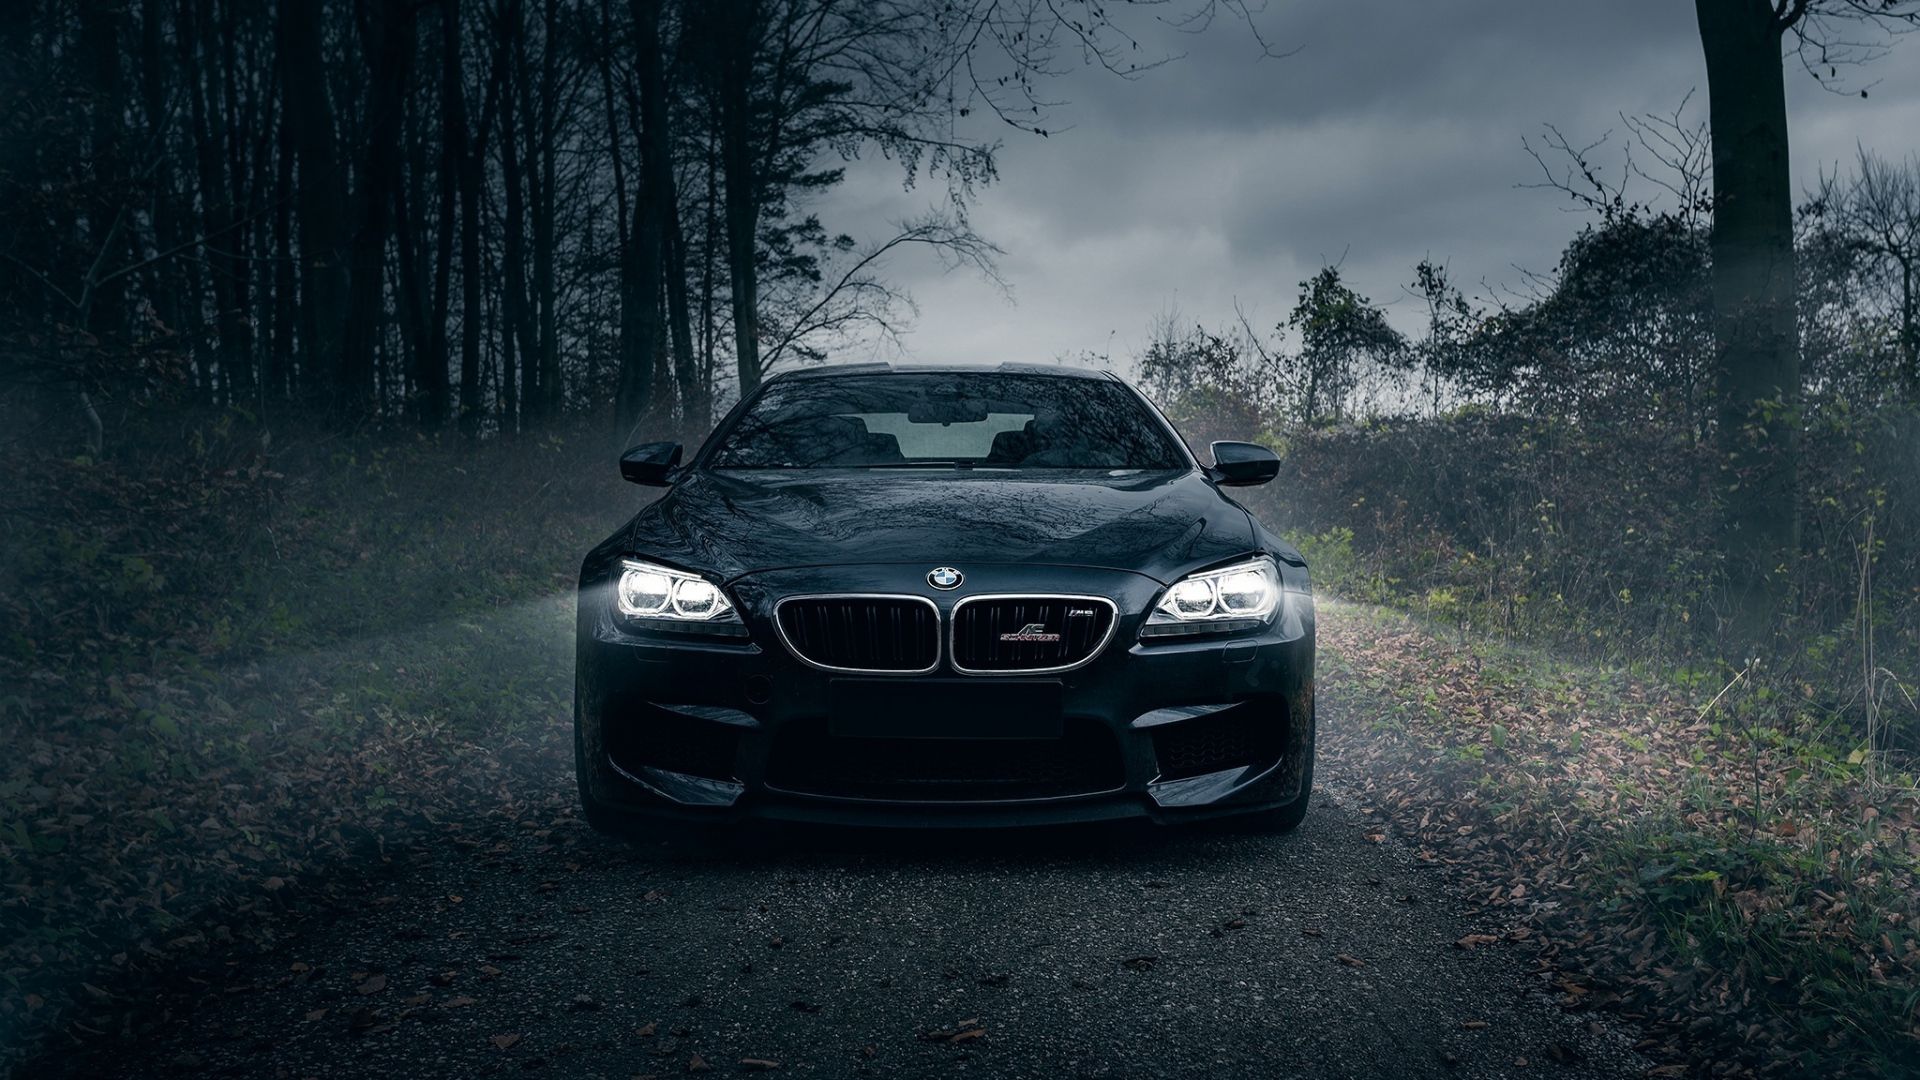 bmw m6 oscuro | BMW fondos de pantalla | Bmw fondos de pantalla, Bmw m6, Bmw m6 coupe